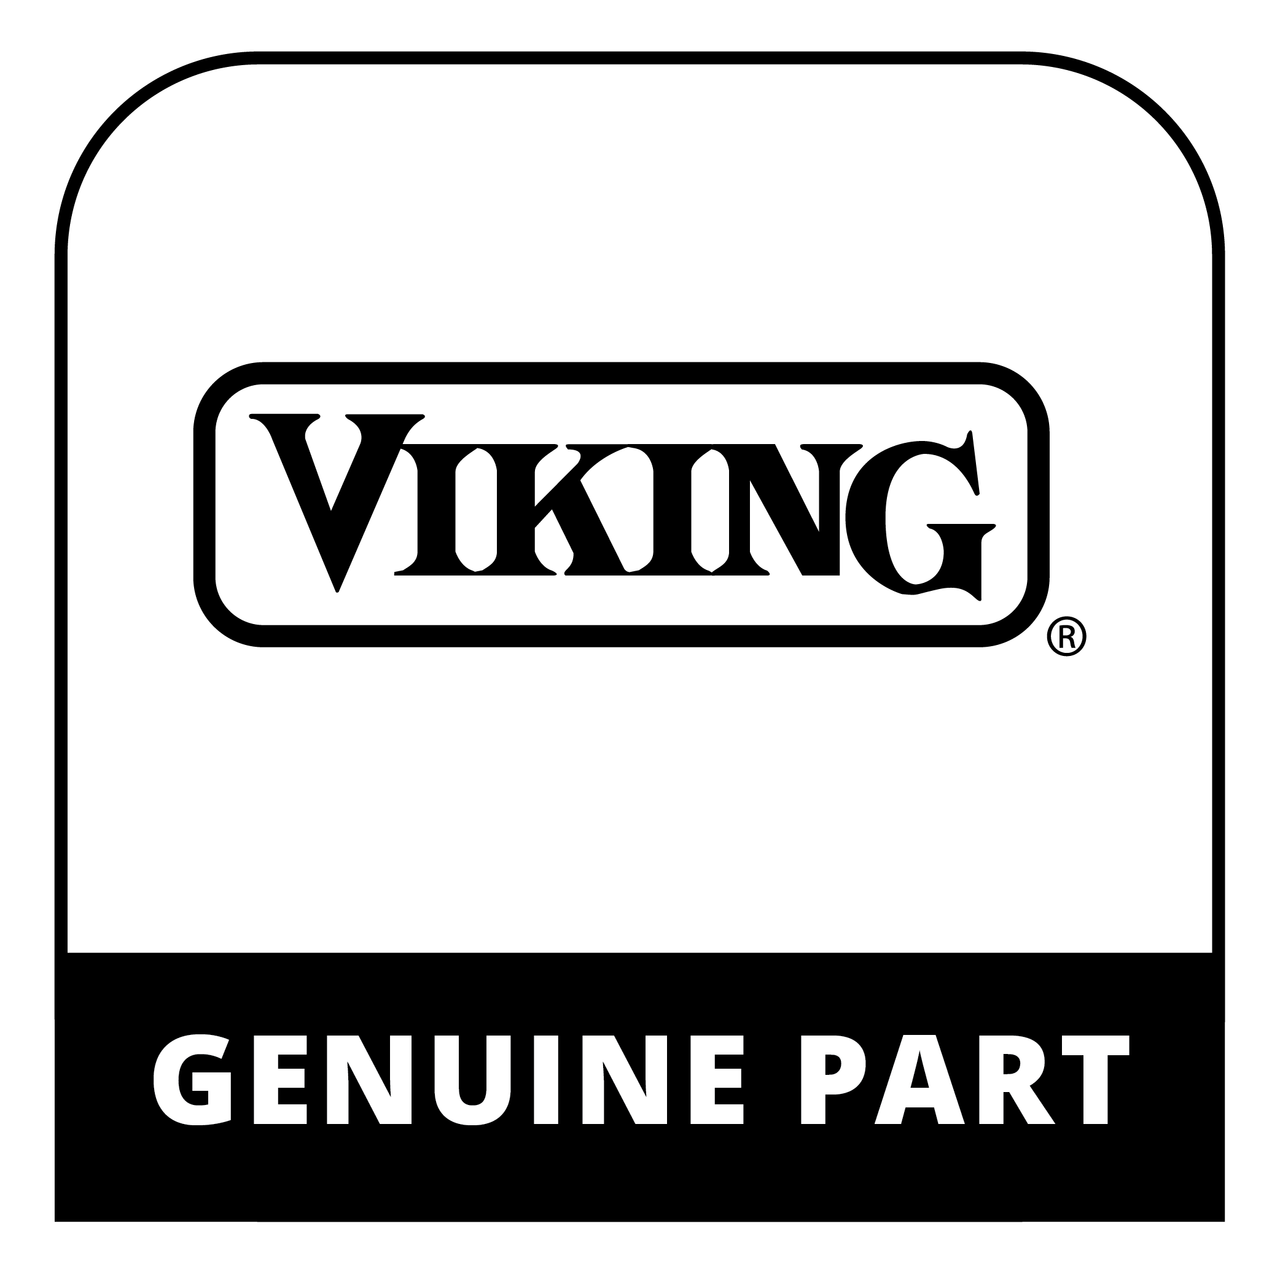 Viking 068574-6258 - Pnl, Door, Oven, Sml- Cast Black (Cb) - Genuine Viking Part